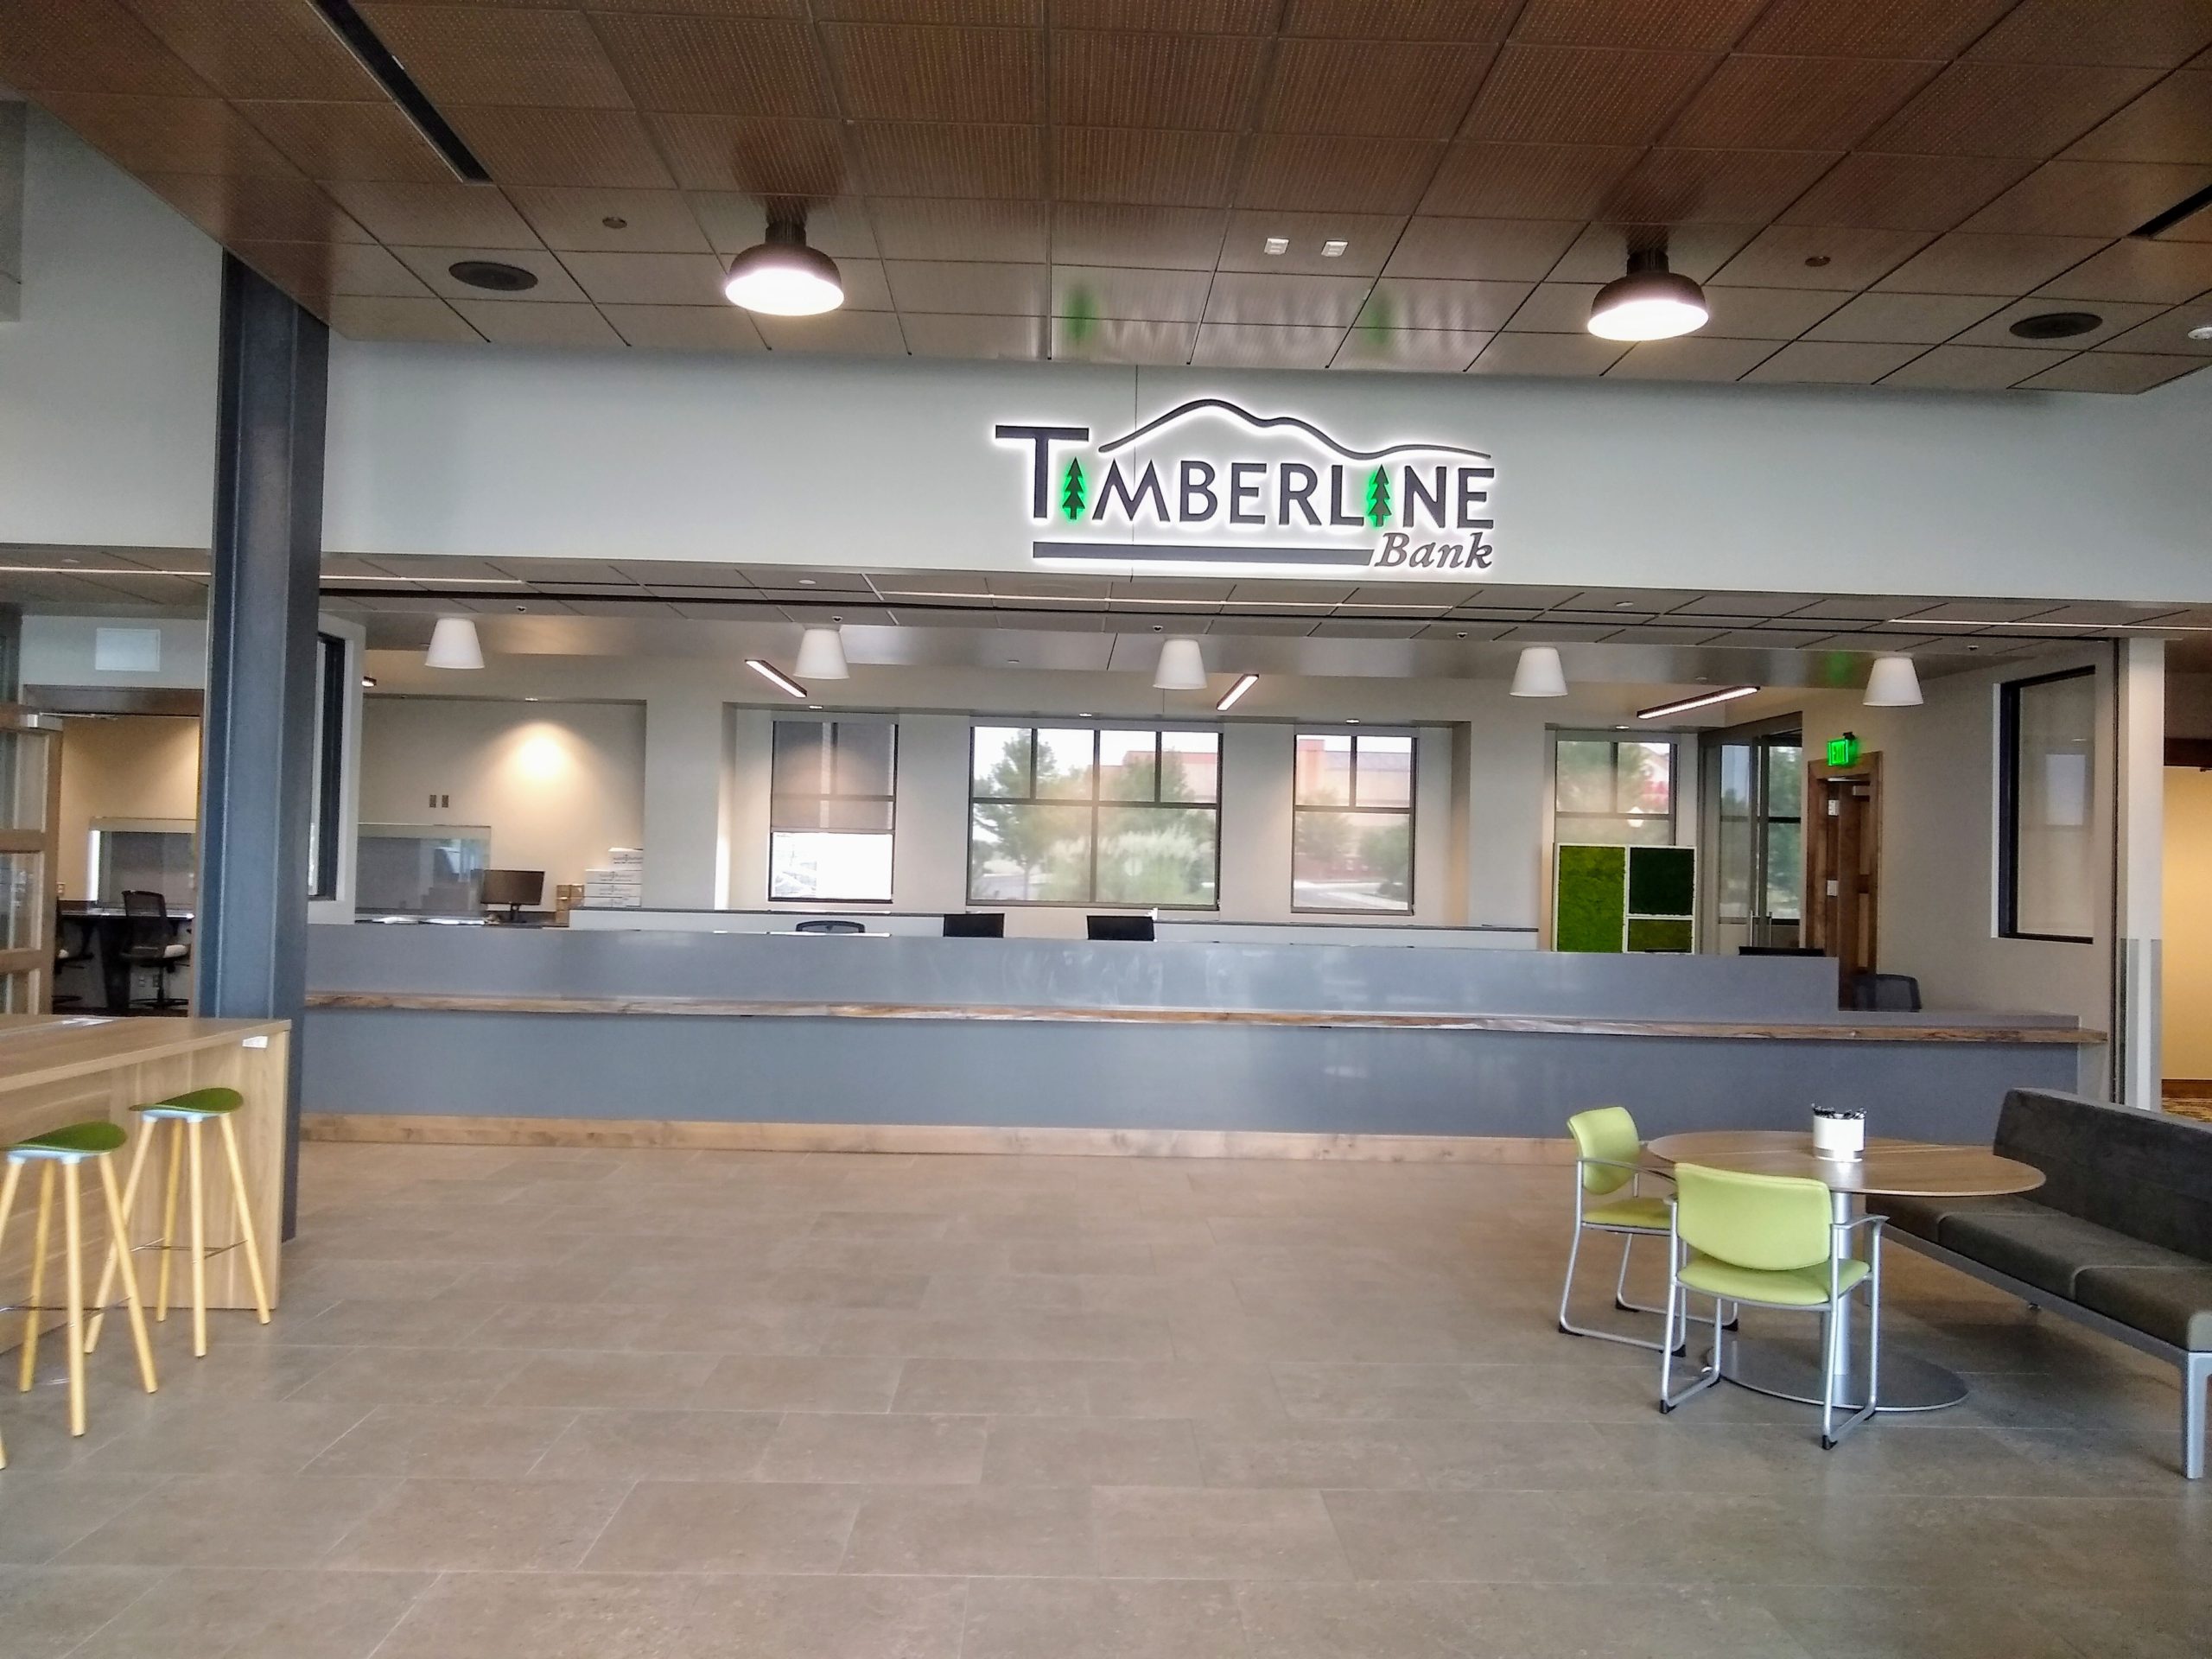 Timberline Bank teller line